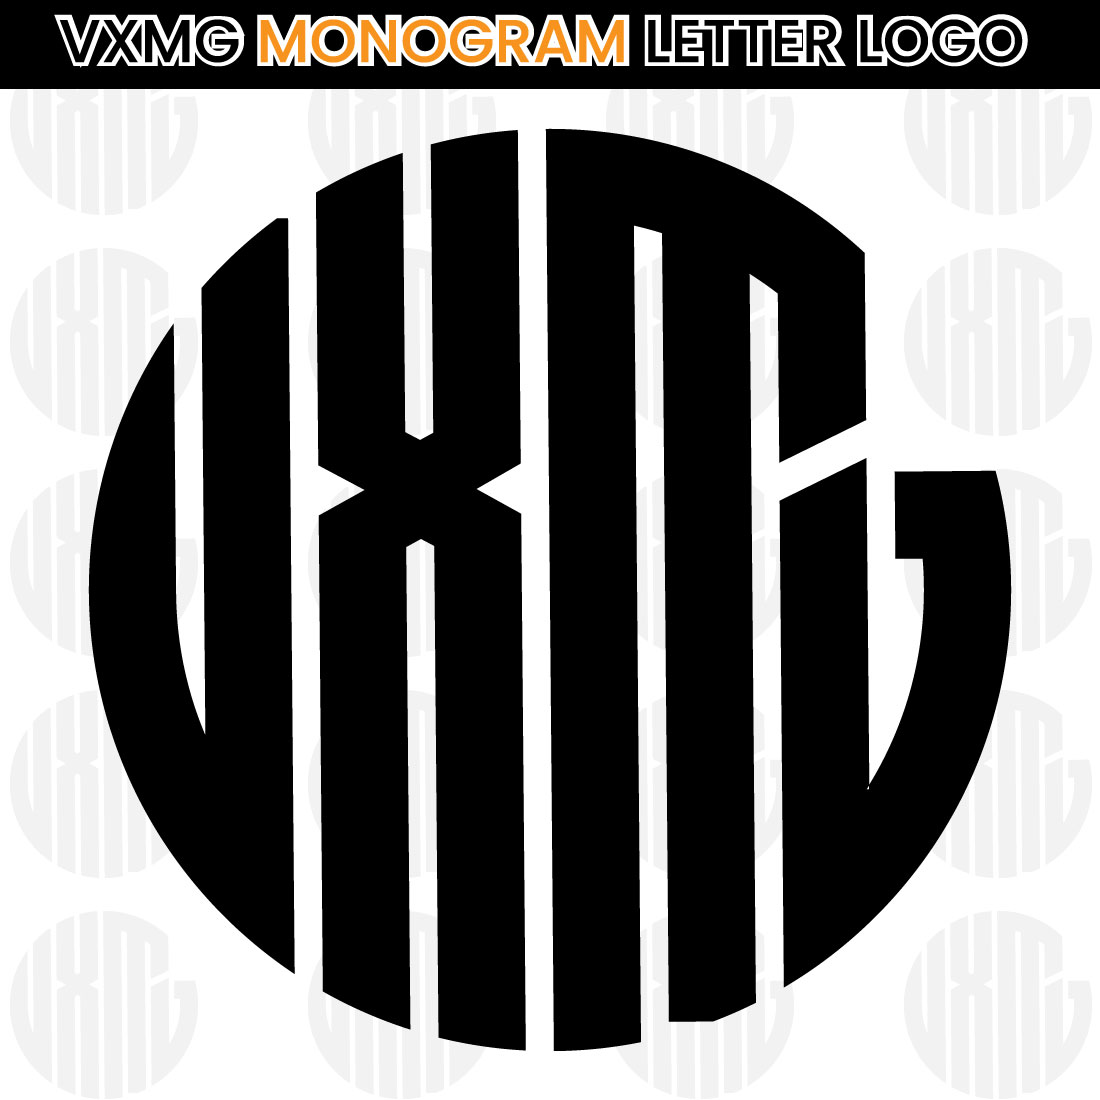 Letter Monogram Logo Template cover image.